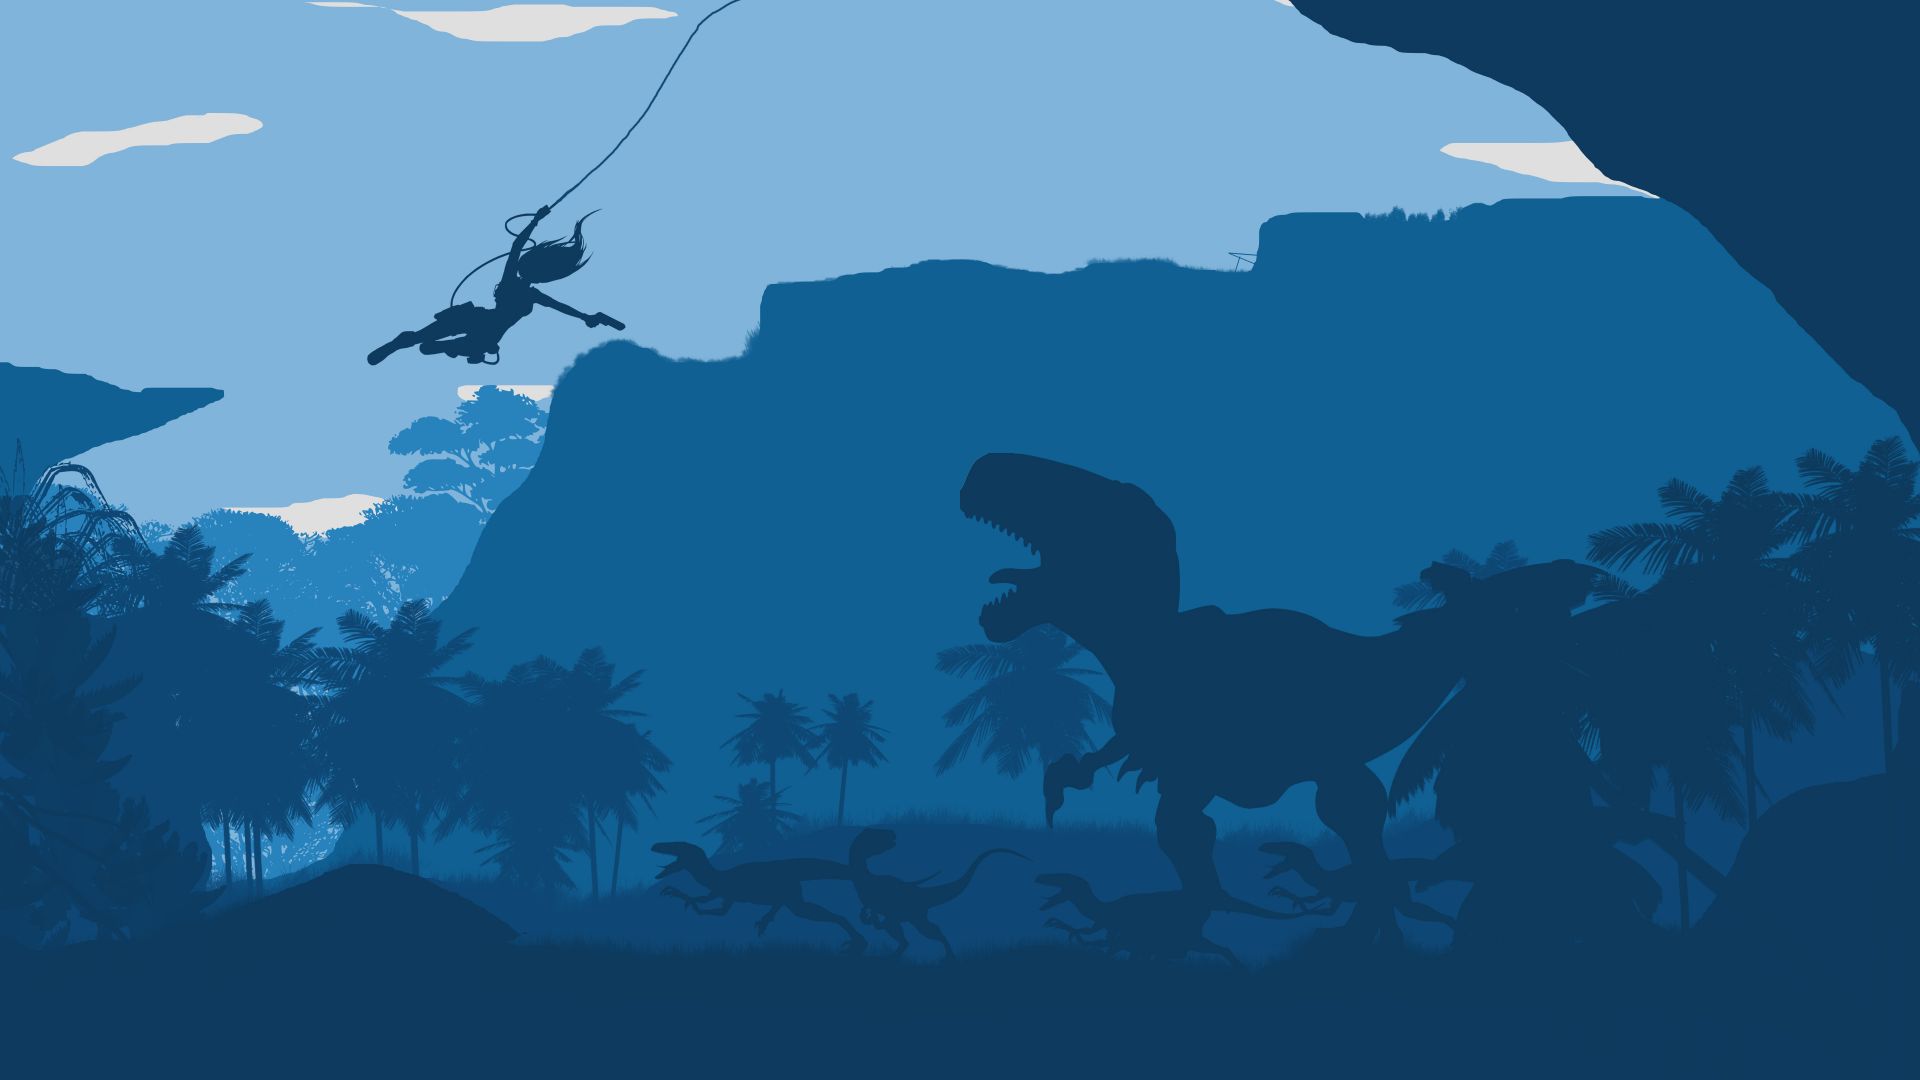 томб рейдера, лес, динозавр, голубой, tomb raider, forest, dinosaur, blue, flat (horizontal)